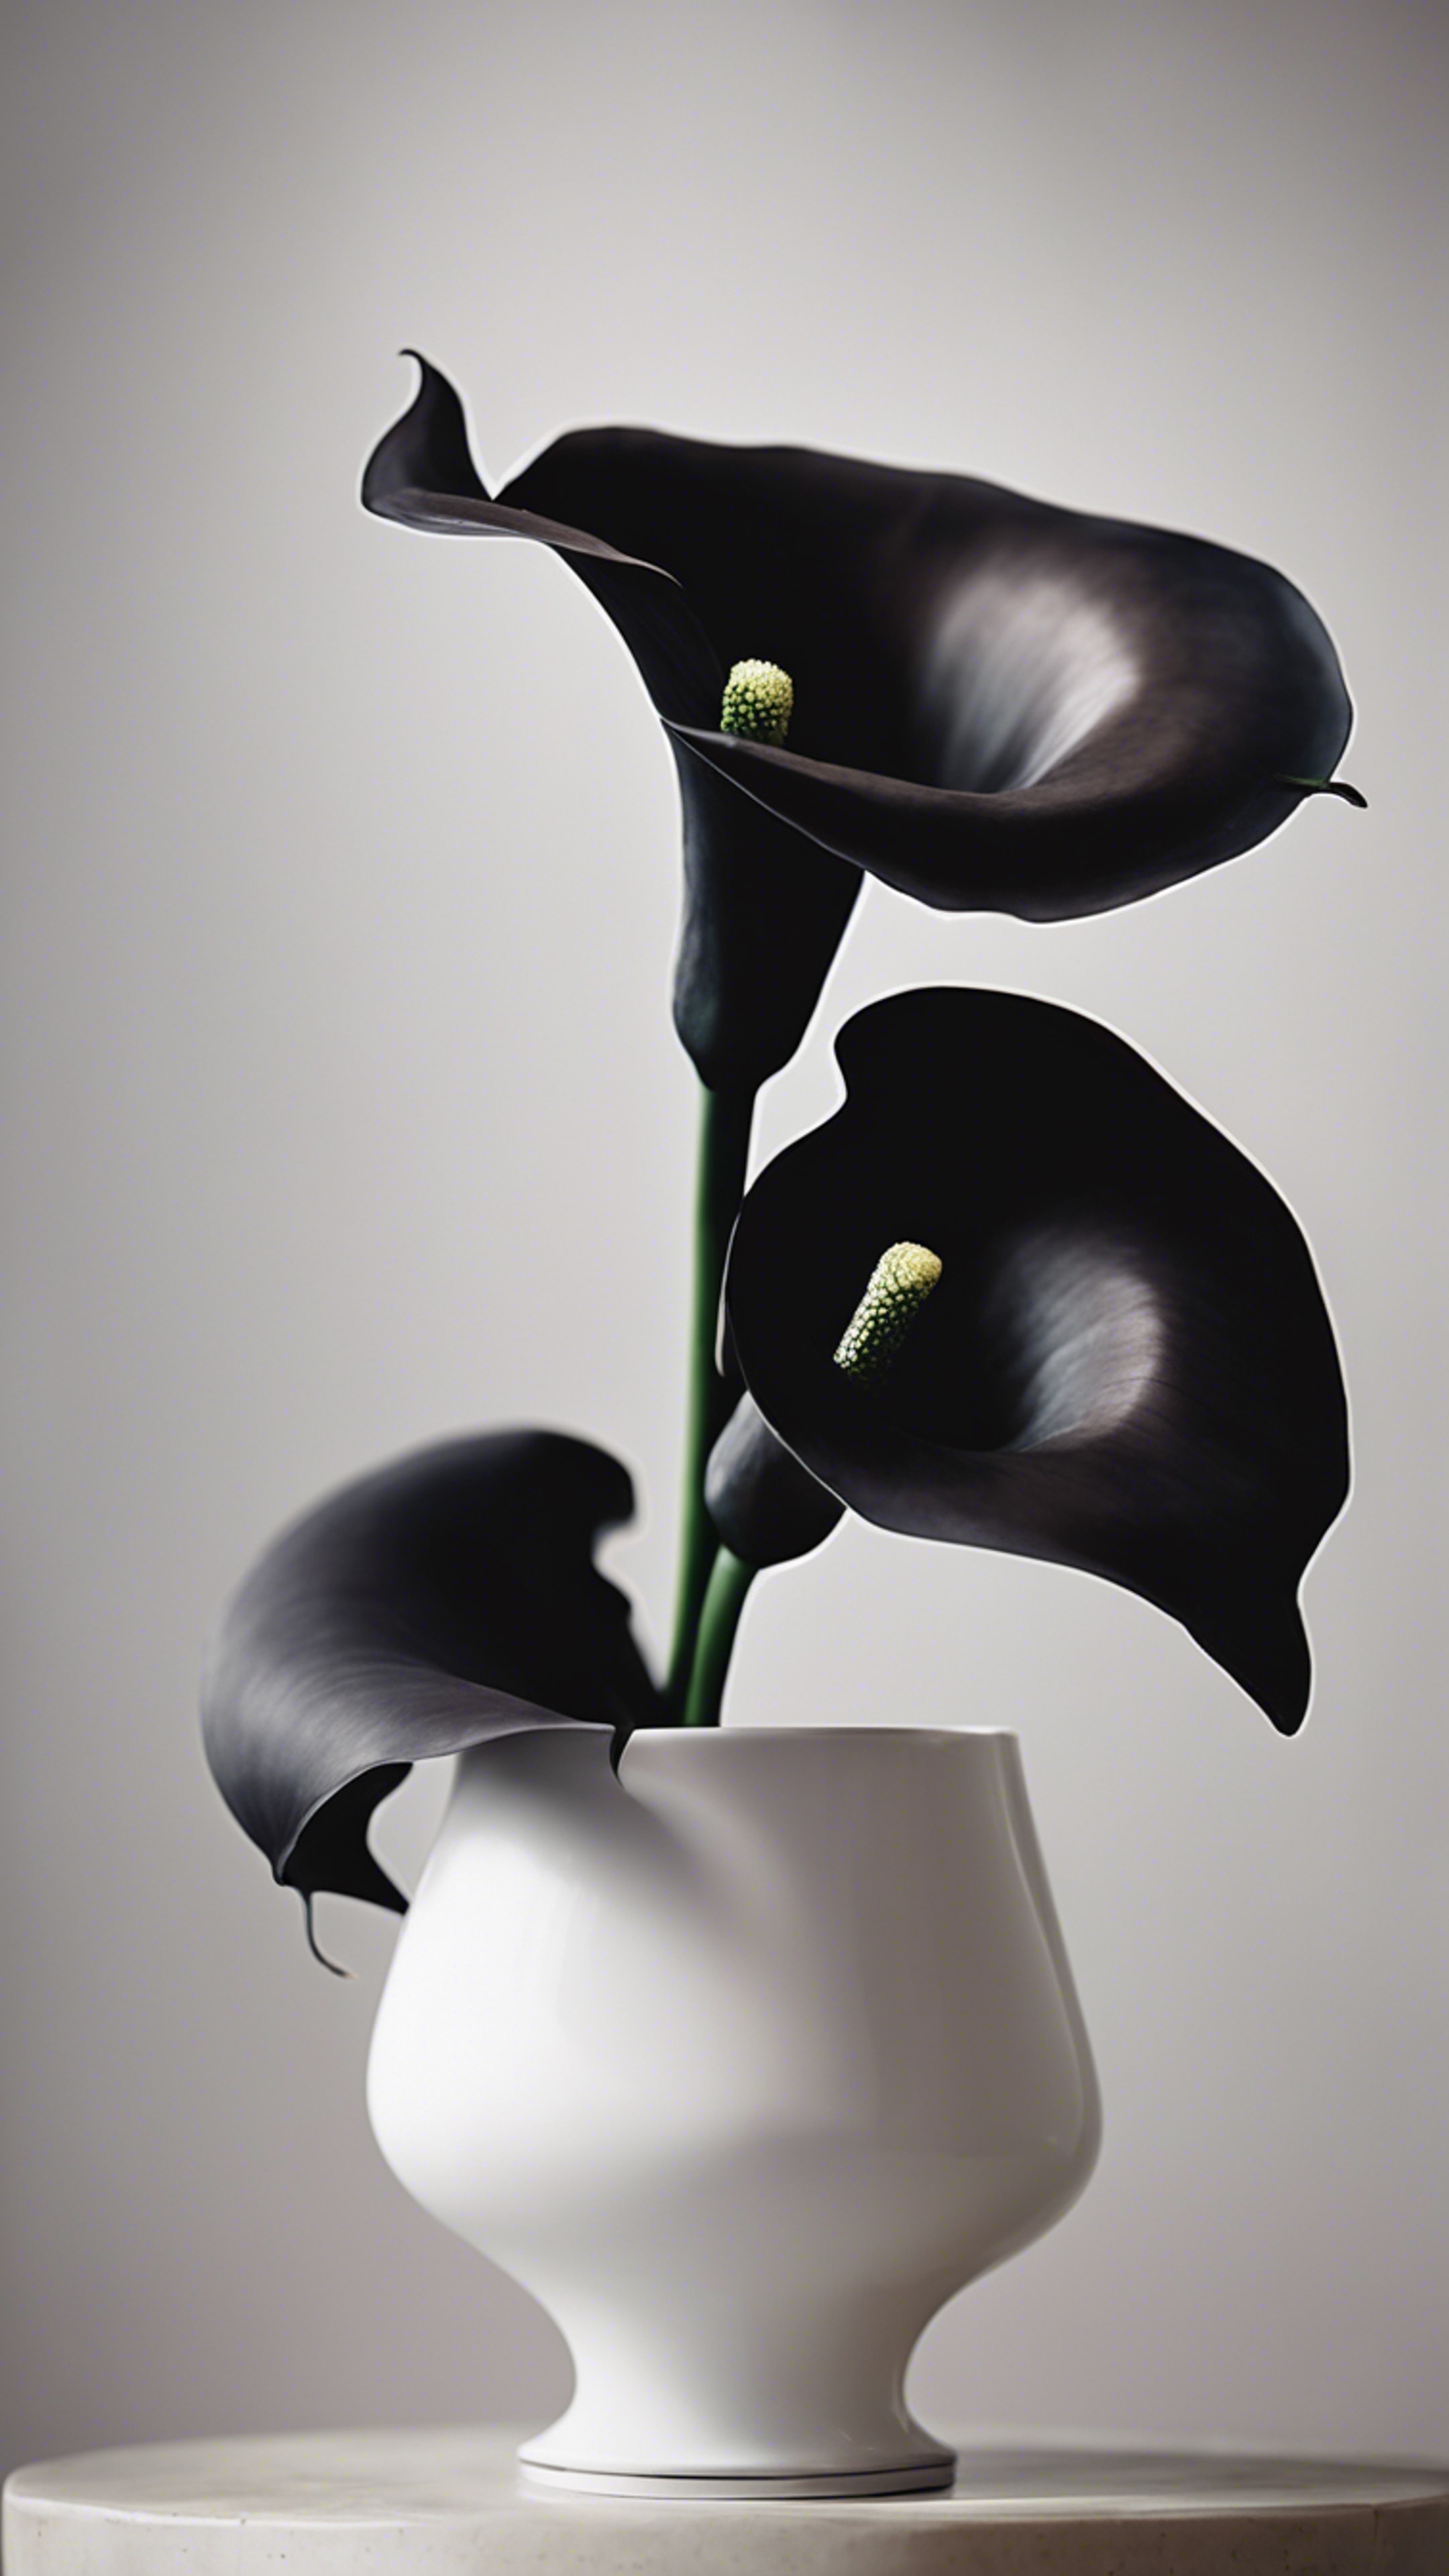 A breathtaking centerpiece featuring a black calla lily in a modern white vase. 牆紙[9d5d01b6790e4db4a8d5]